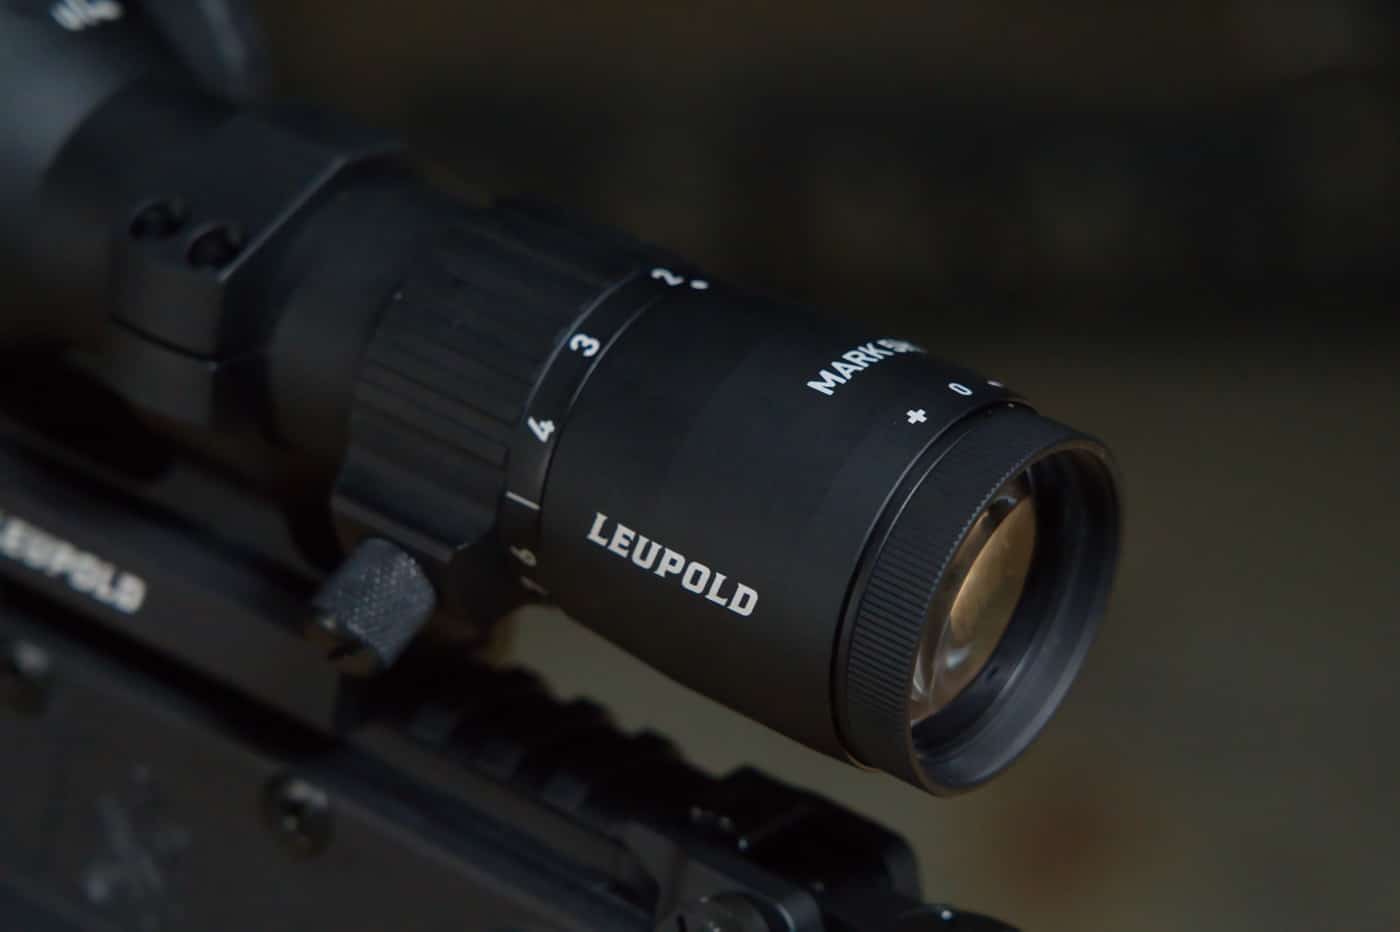 optic clarity of the leupold 5hd 2-10x30 scope